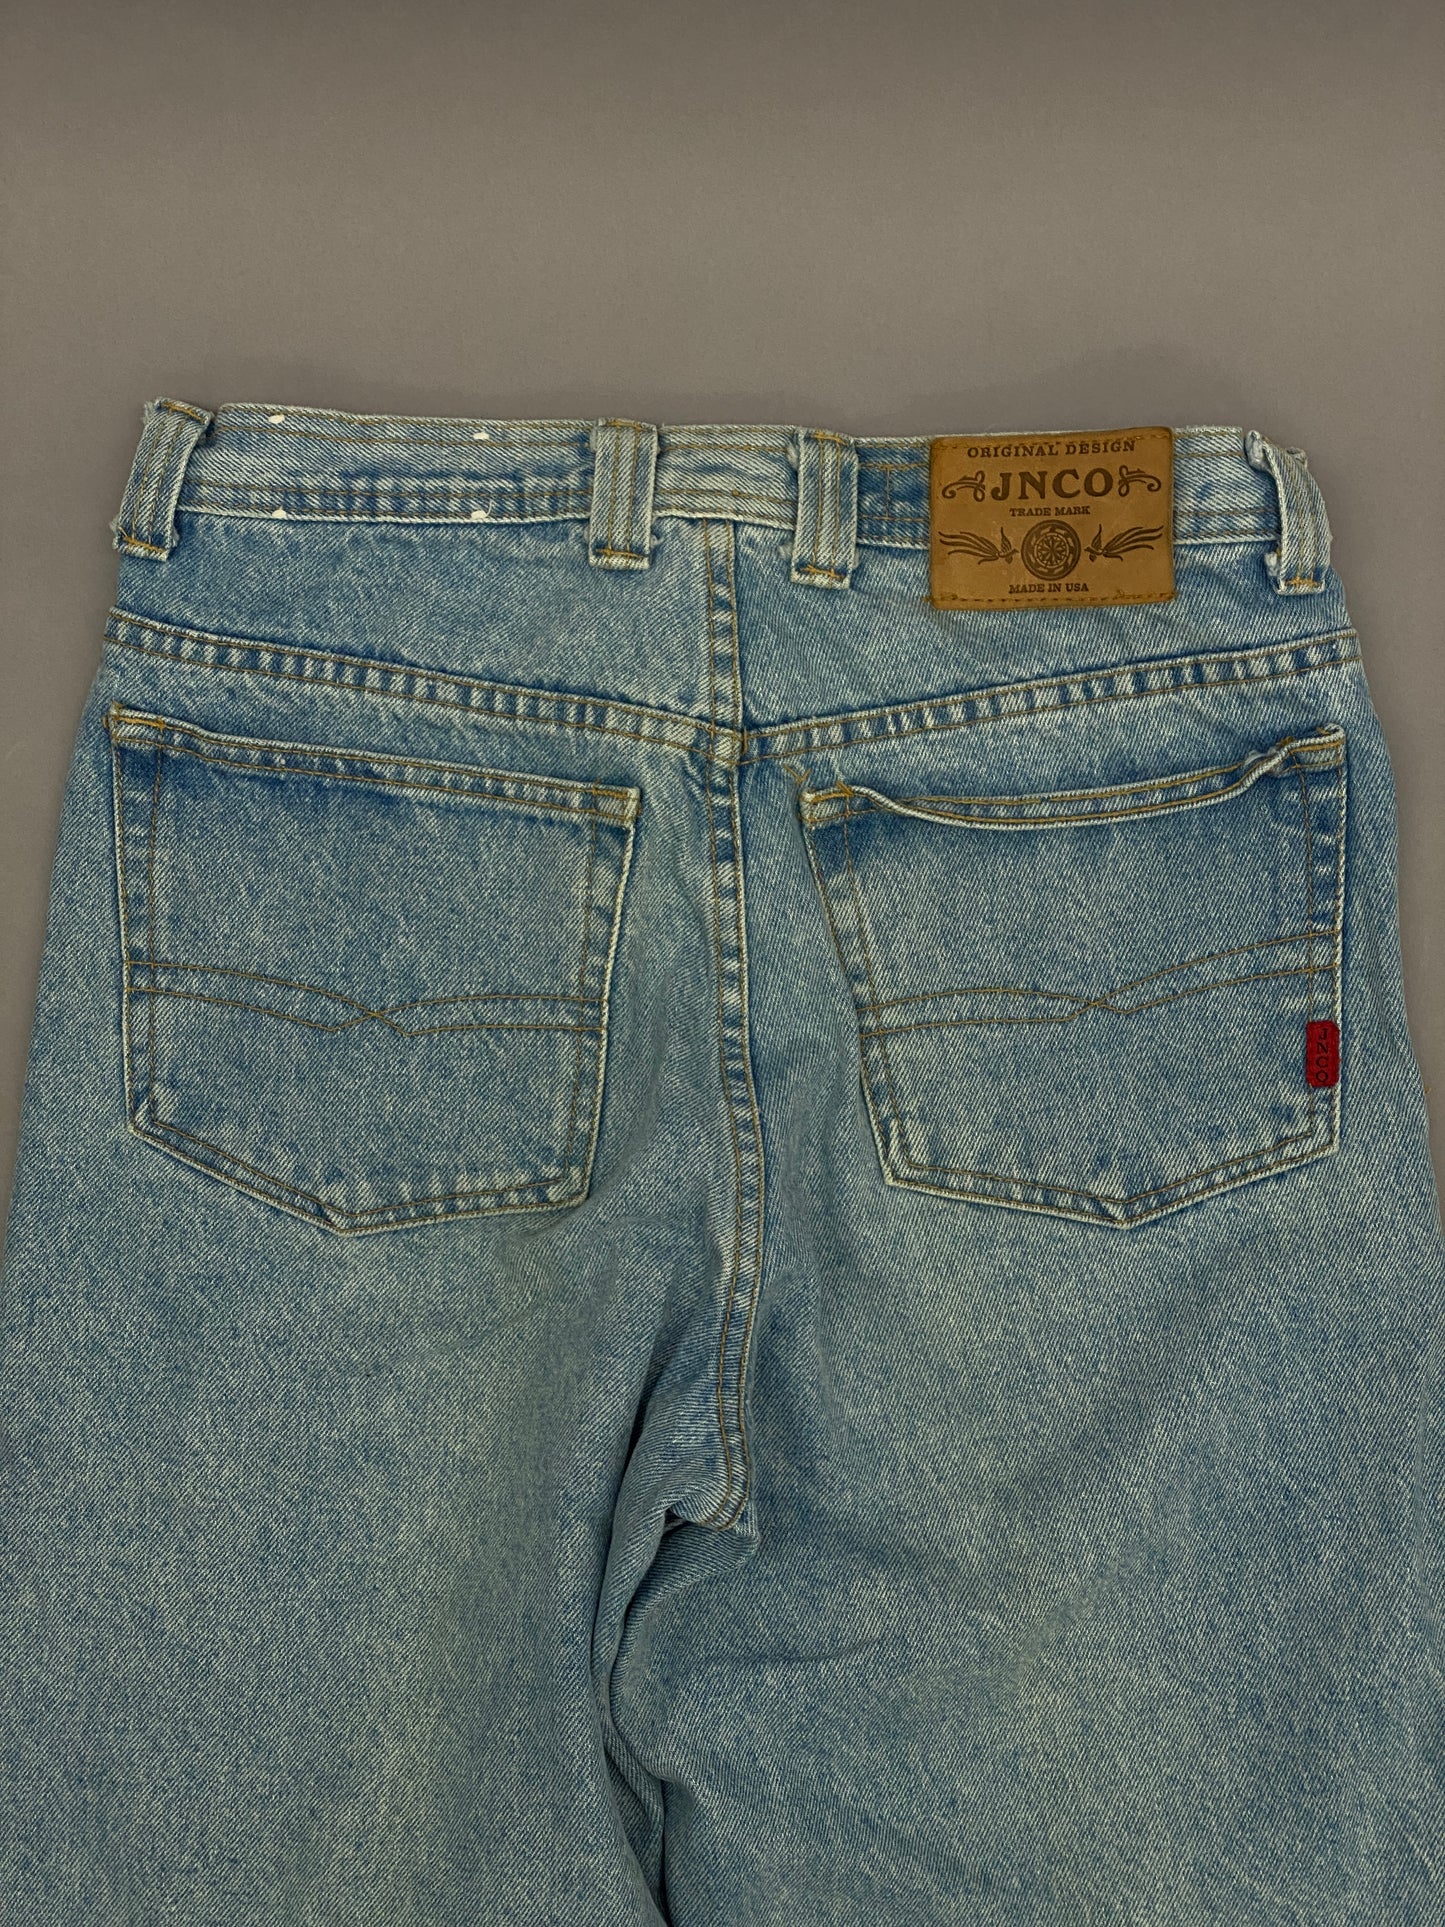 JNCO Double Knee Vintage Jeans - 31